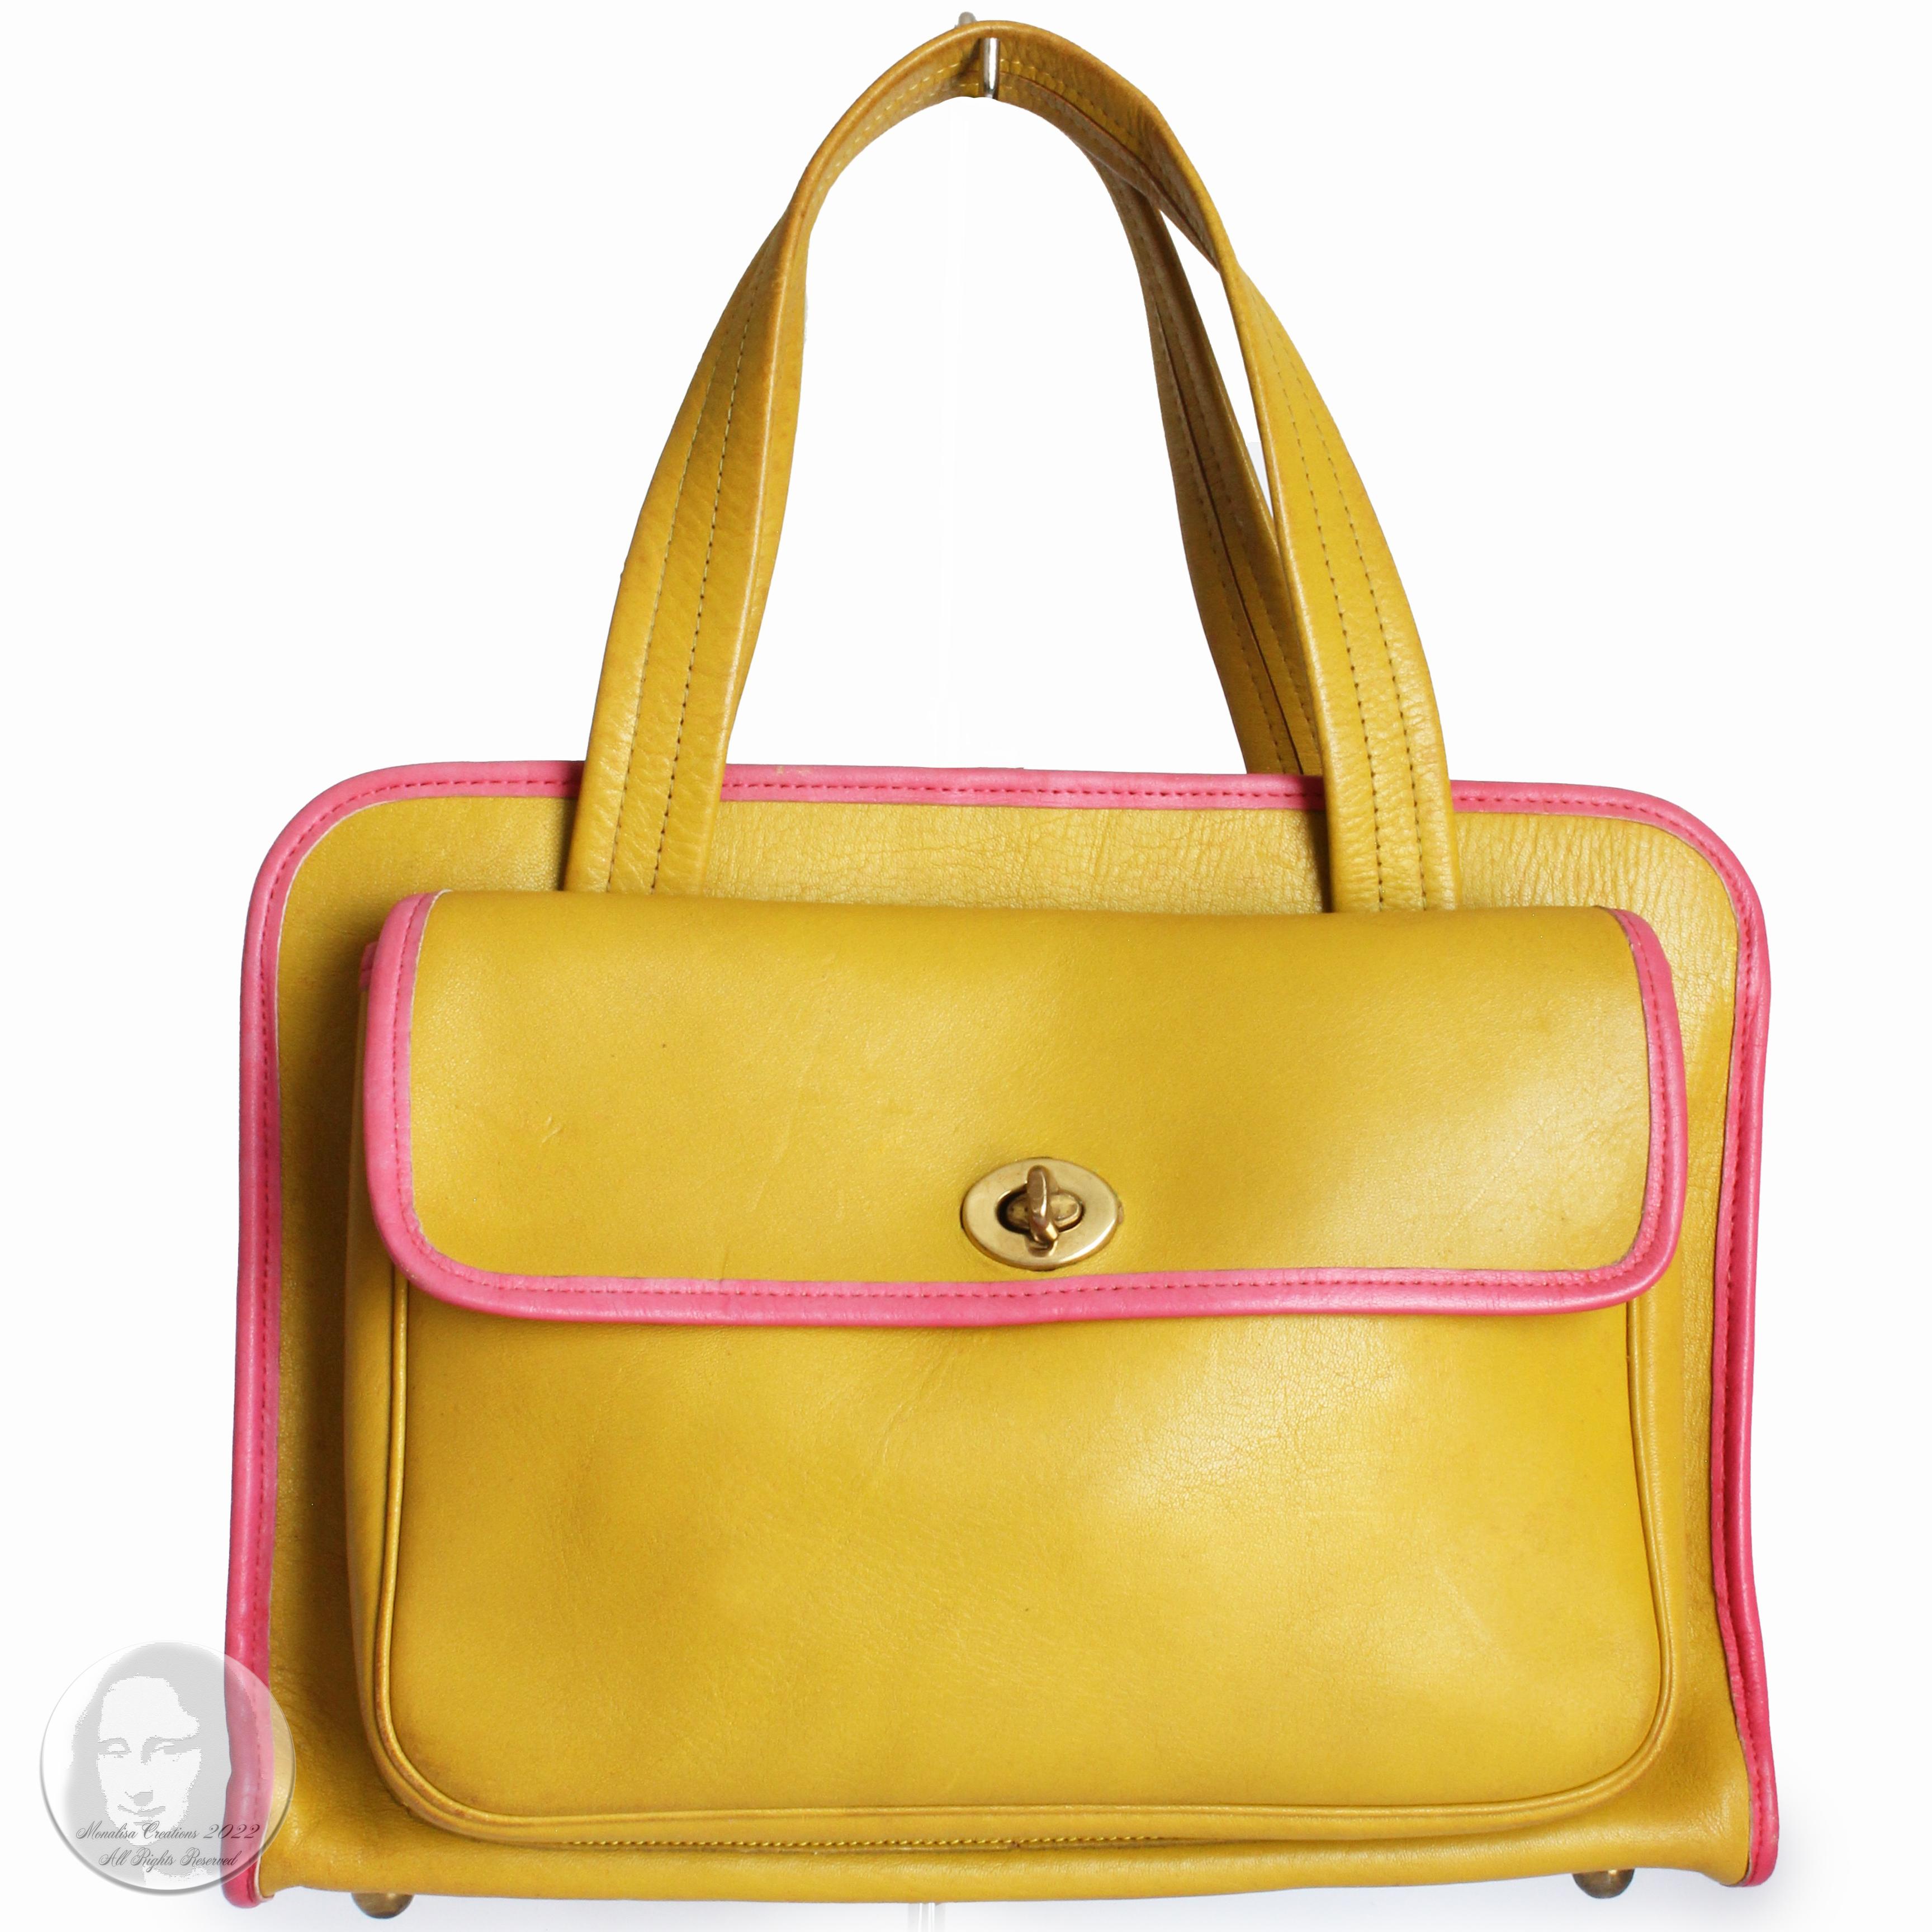 Authentic, preowned, vintage 60s Bonnie Cashin for Coach Safari Bag or Double Turnlock Pocket Tote bag. A SUPER RARE BAG! 